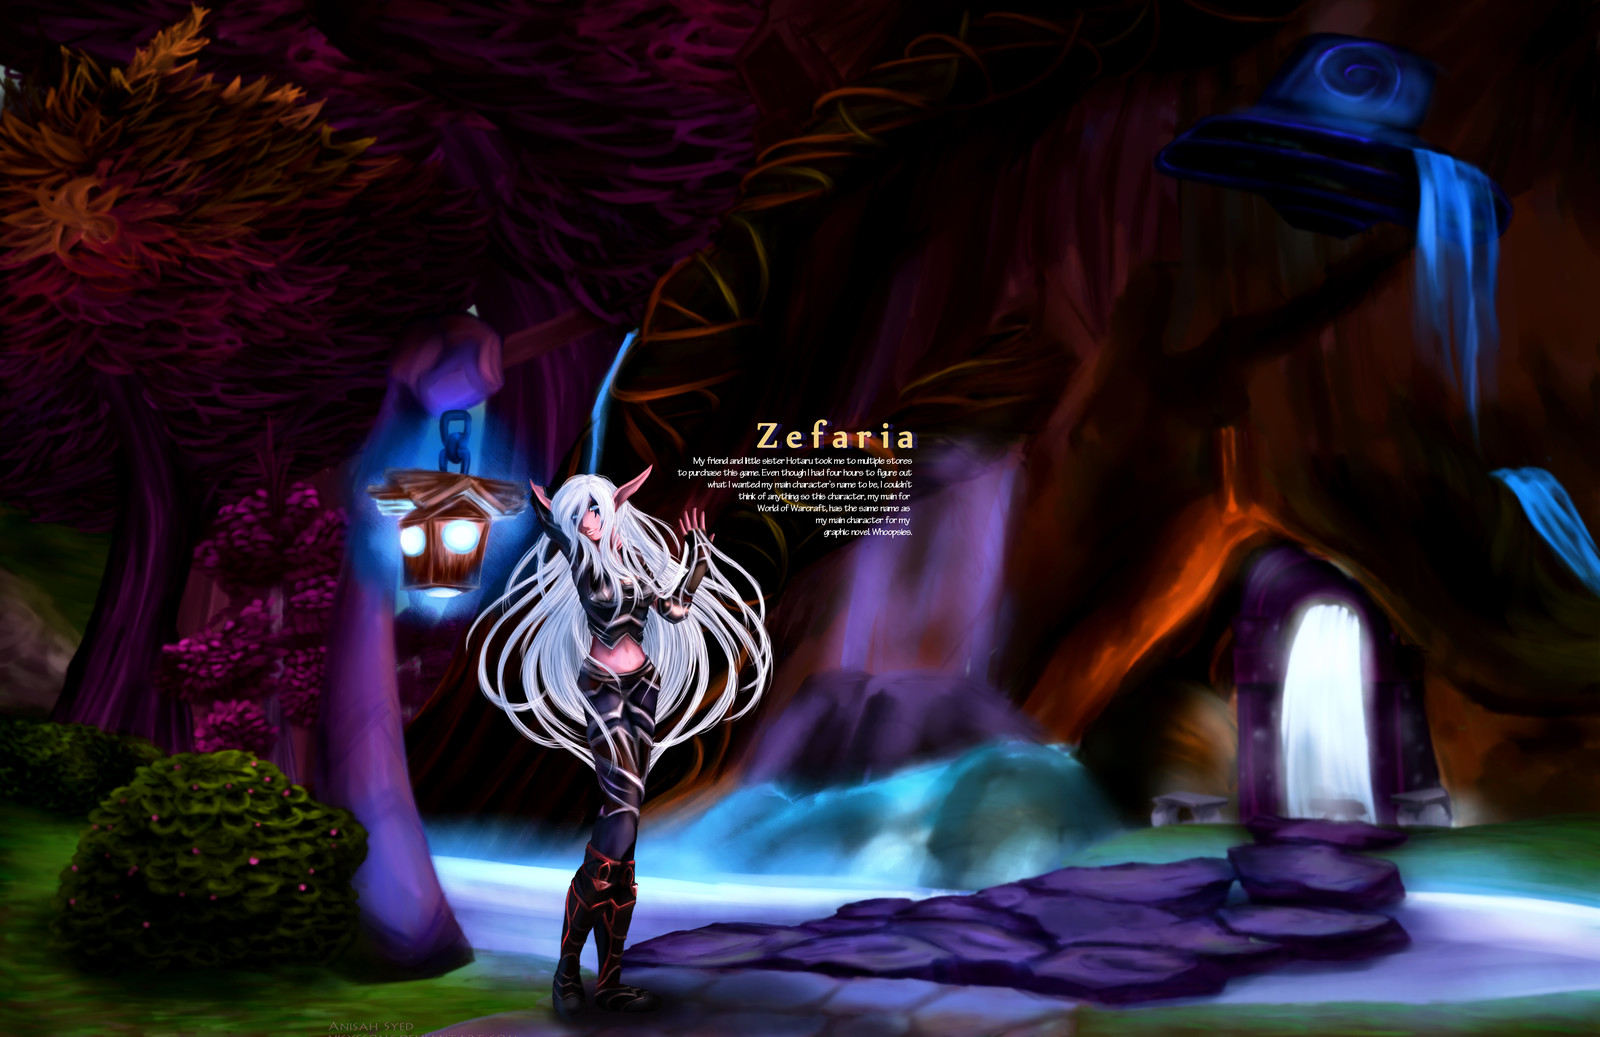 Night Elf Zefaria from World of Warcraft